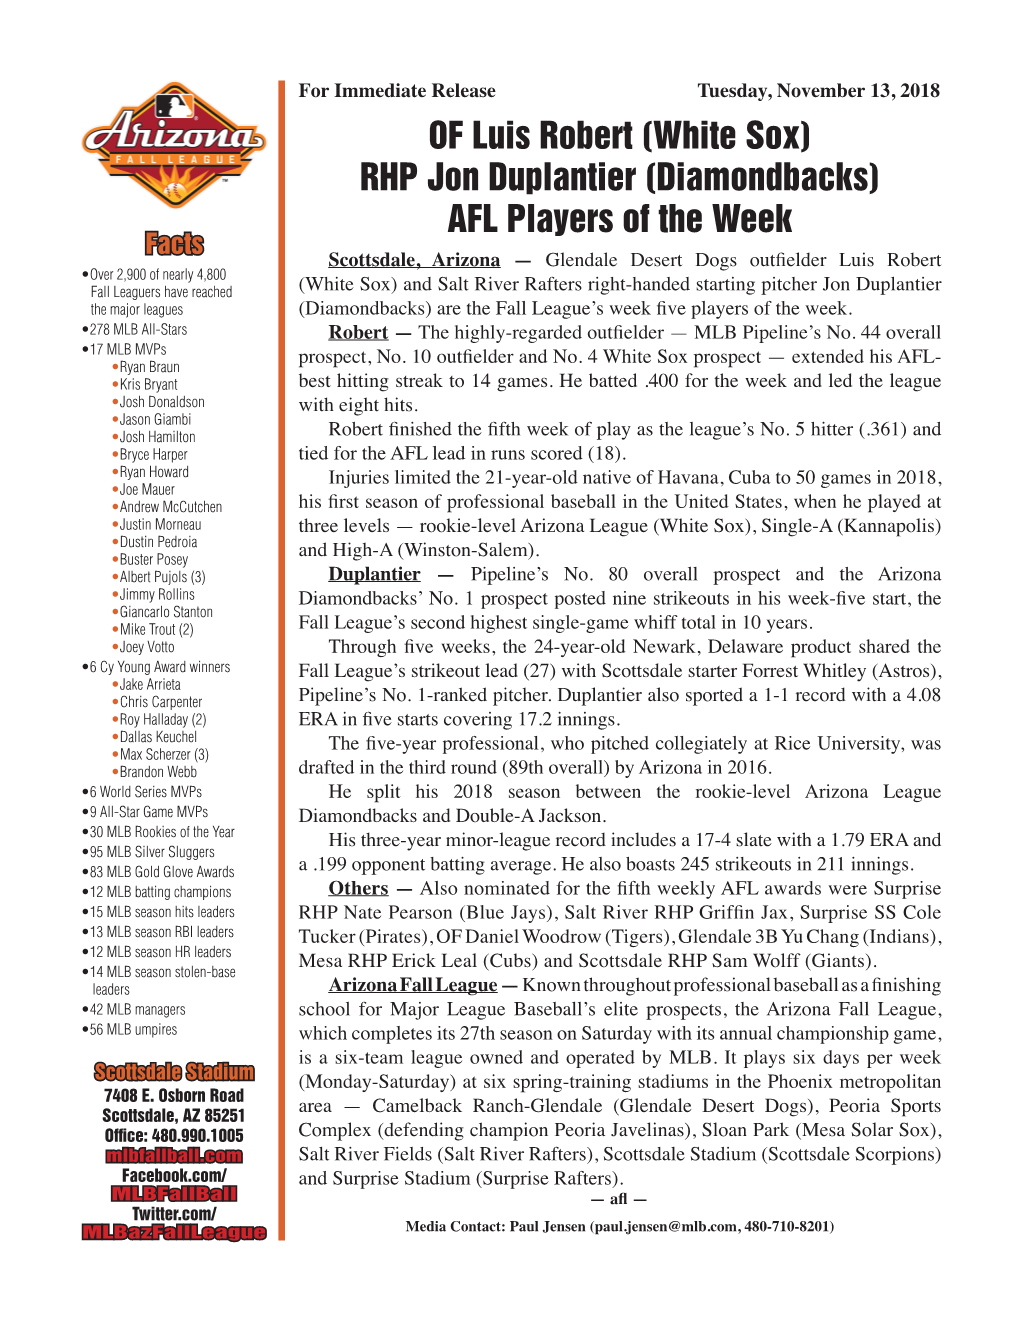 OF Luis Robert (White Sox) RHP Jon Duplantier (Diamondbacks) AFL